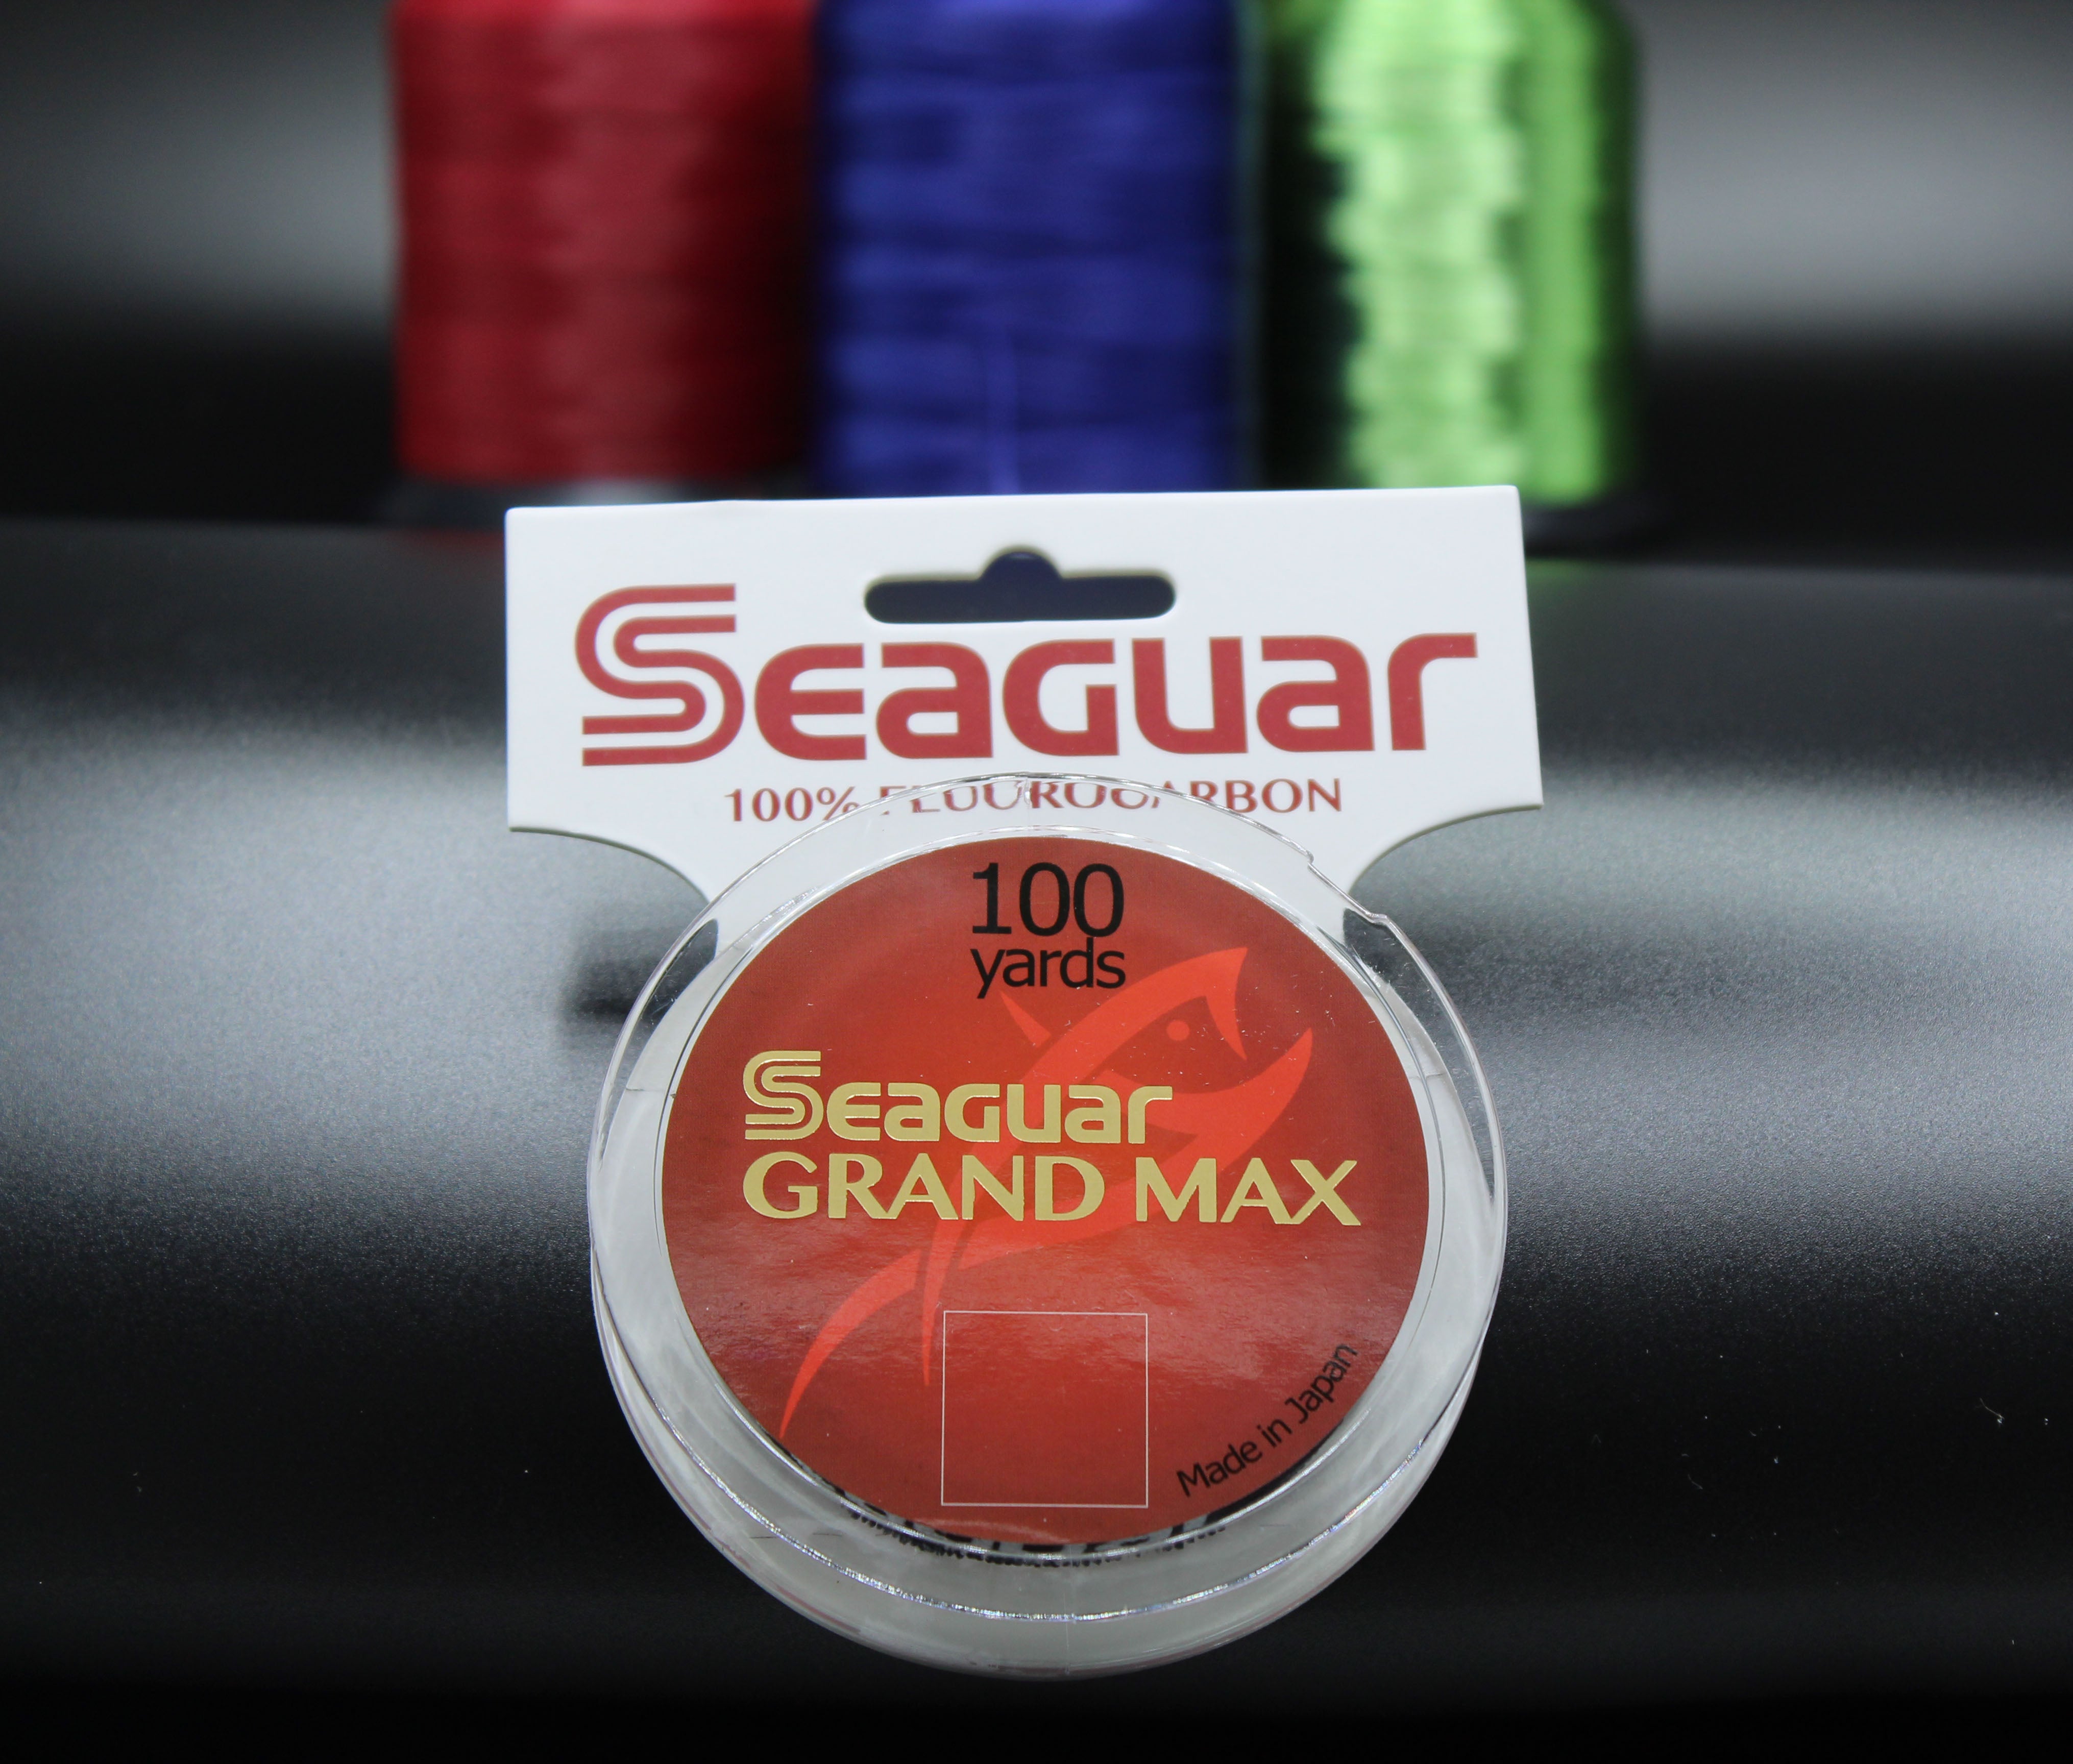 Seaguar Grand Max Soft Plus Flurocarbon Fishing Line 250m Spools